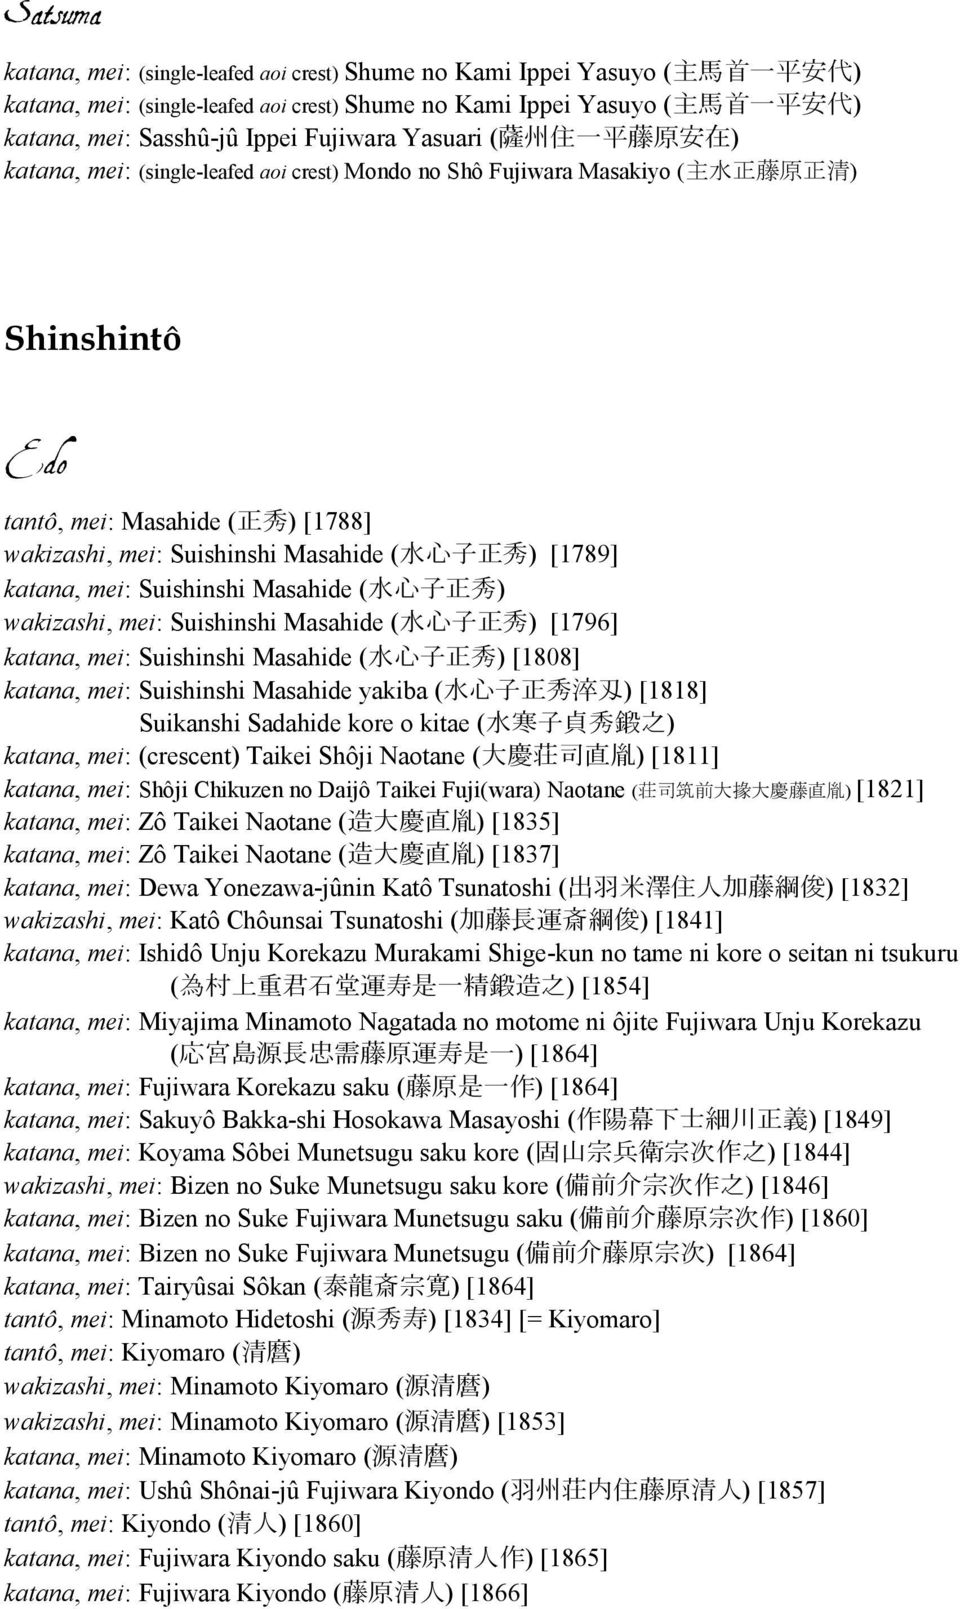 Suishinshi Masahide ( 水 心 子 正 秀 ) [1789] katana, mei: Suishinshi Masahide ( 水 心 子 正 秀 ) wakizashi, mei: Suishinshi Masahide ( 水 心 子 正 秀 ) [1796] katana, mei: Suishinshi Masahide ( 水 心 子 正 秀 ) [1808]